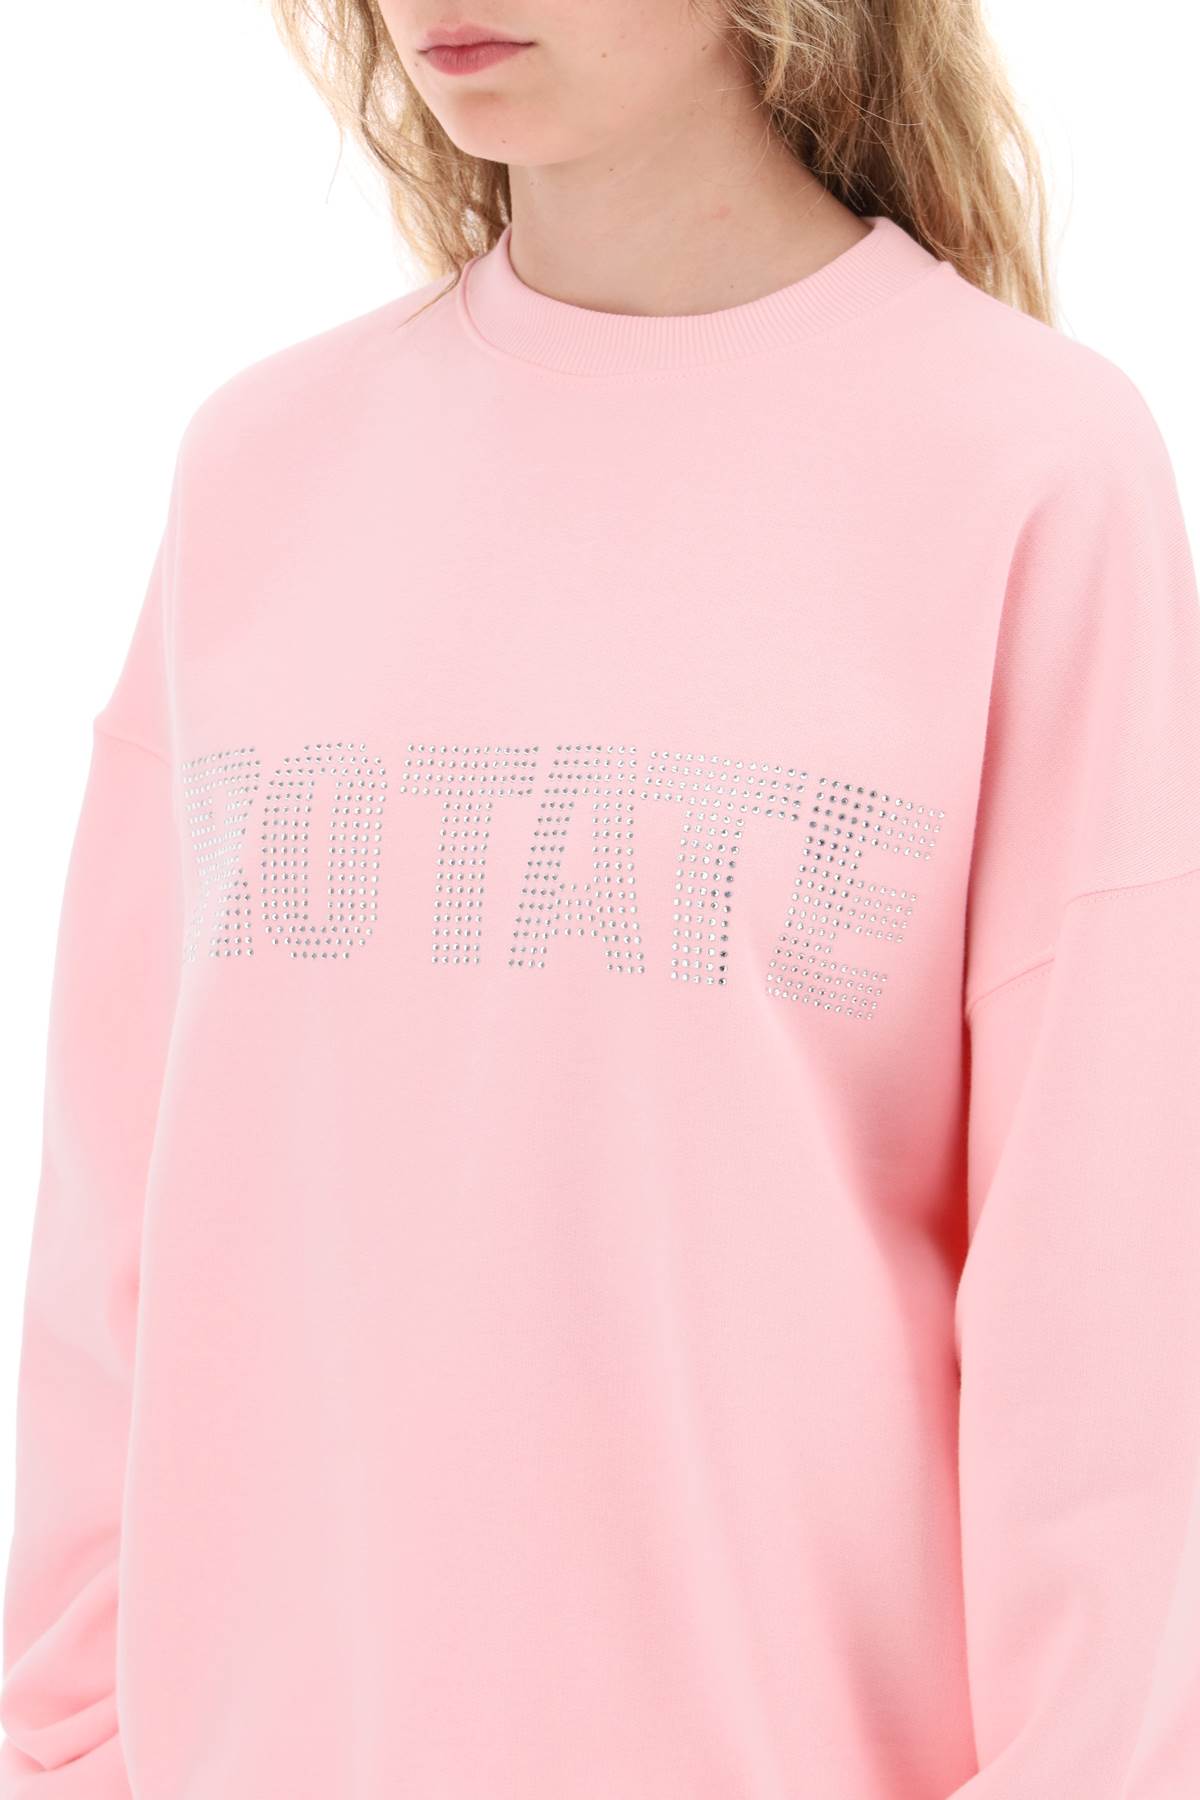 Rotate crew-neck sweatshirt with rhinestone-studded maxi logo-3